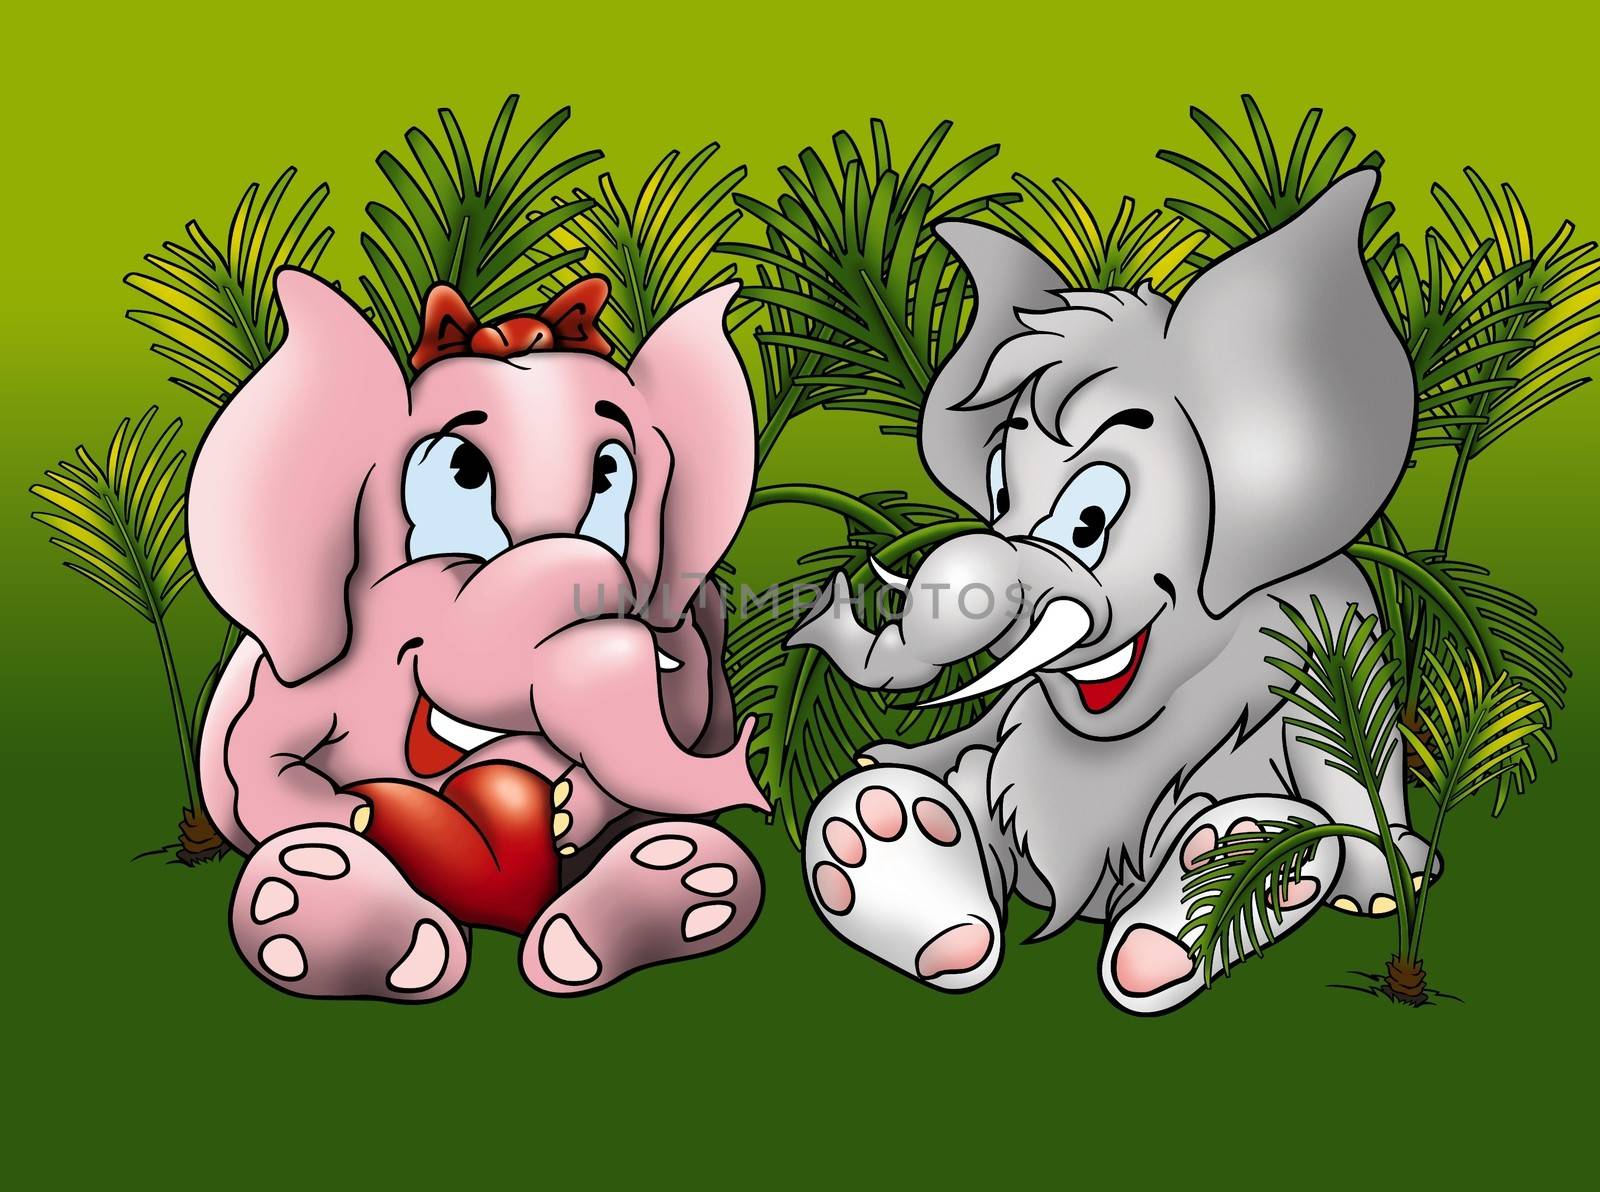 Two Elephants by illustratorCZ